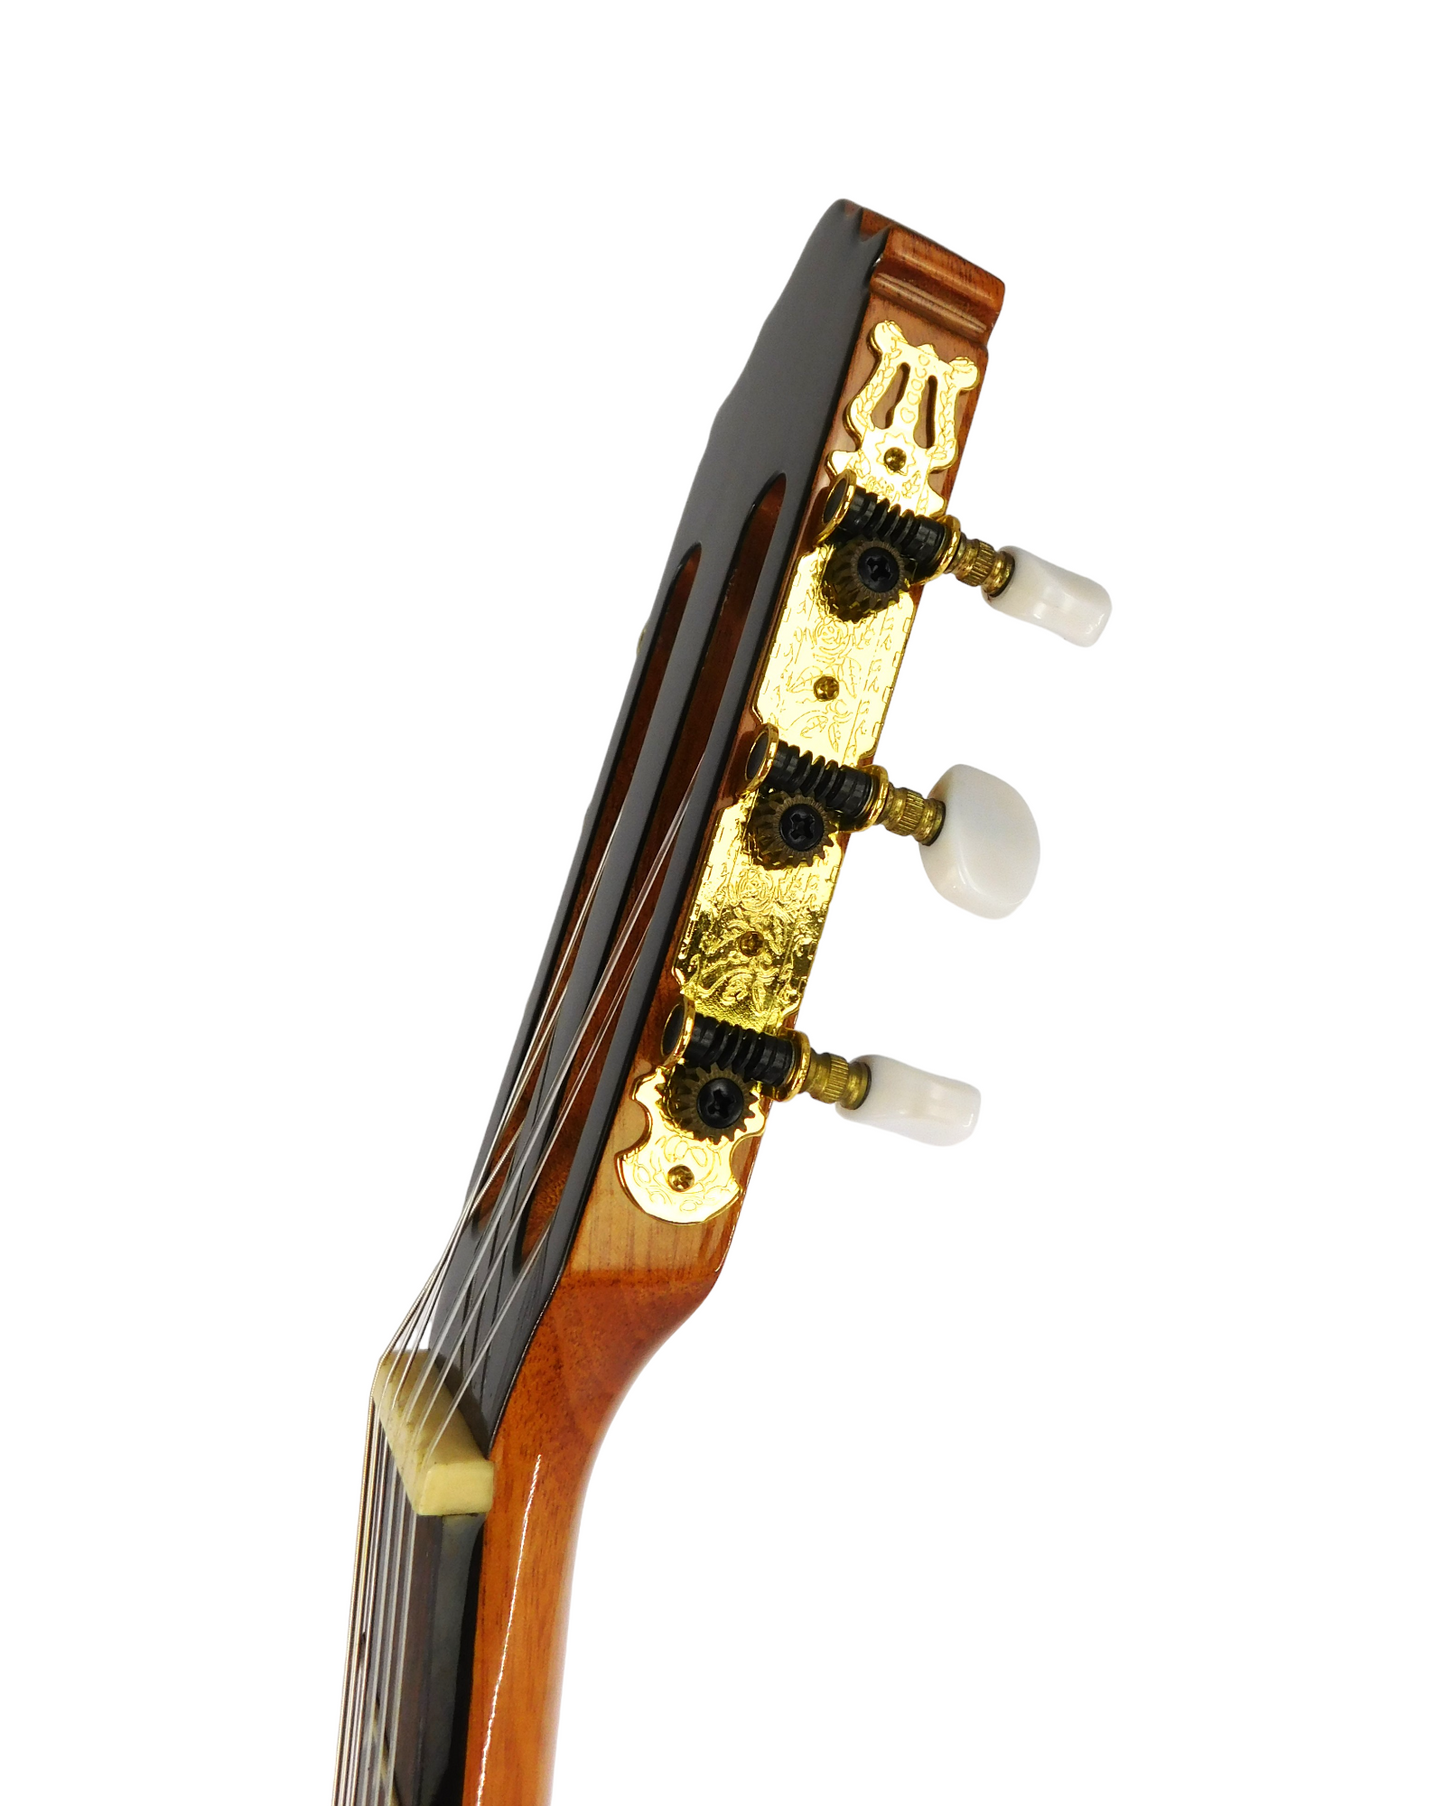 Miguel Rosales Solid Cedar Cutaway Built-In Pickup/Tuner Classical Guitar - Natural HS20CEQN